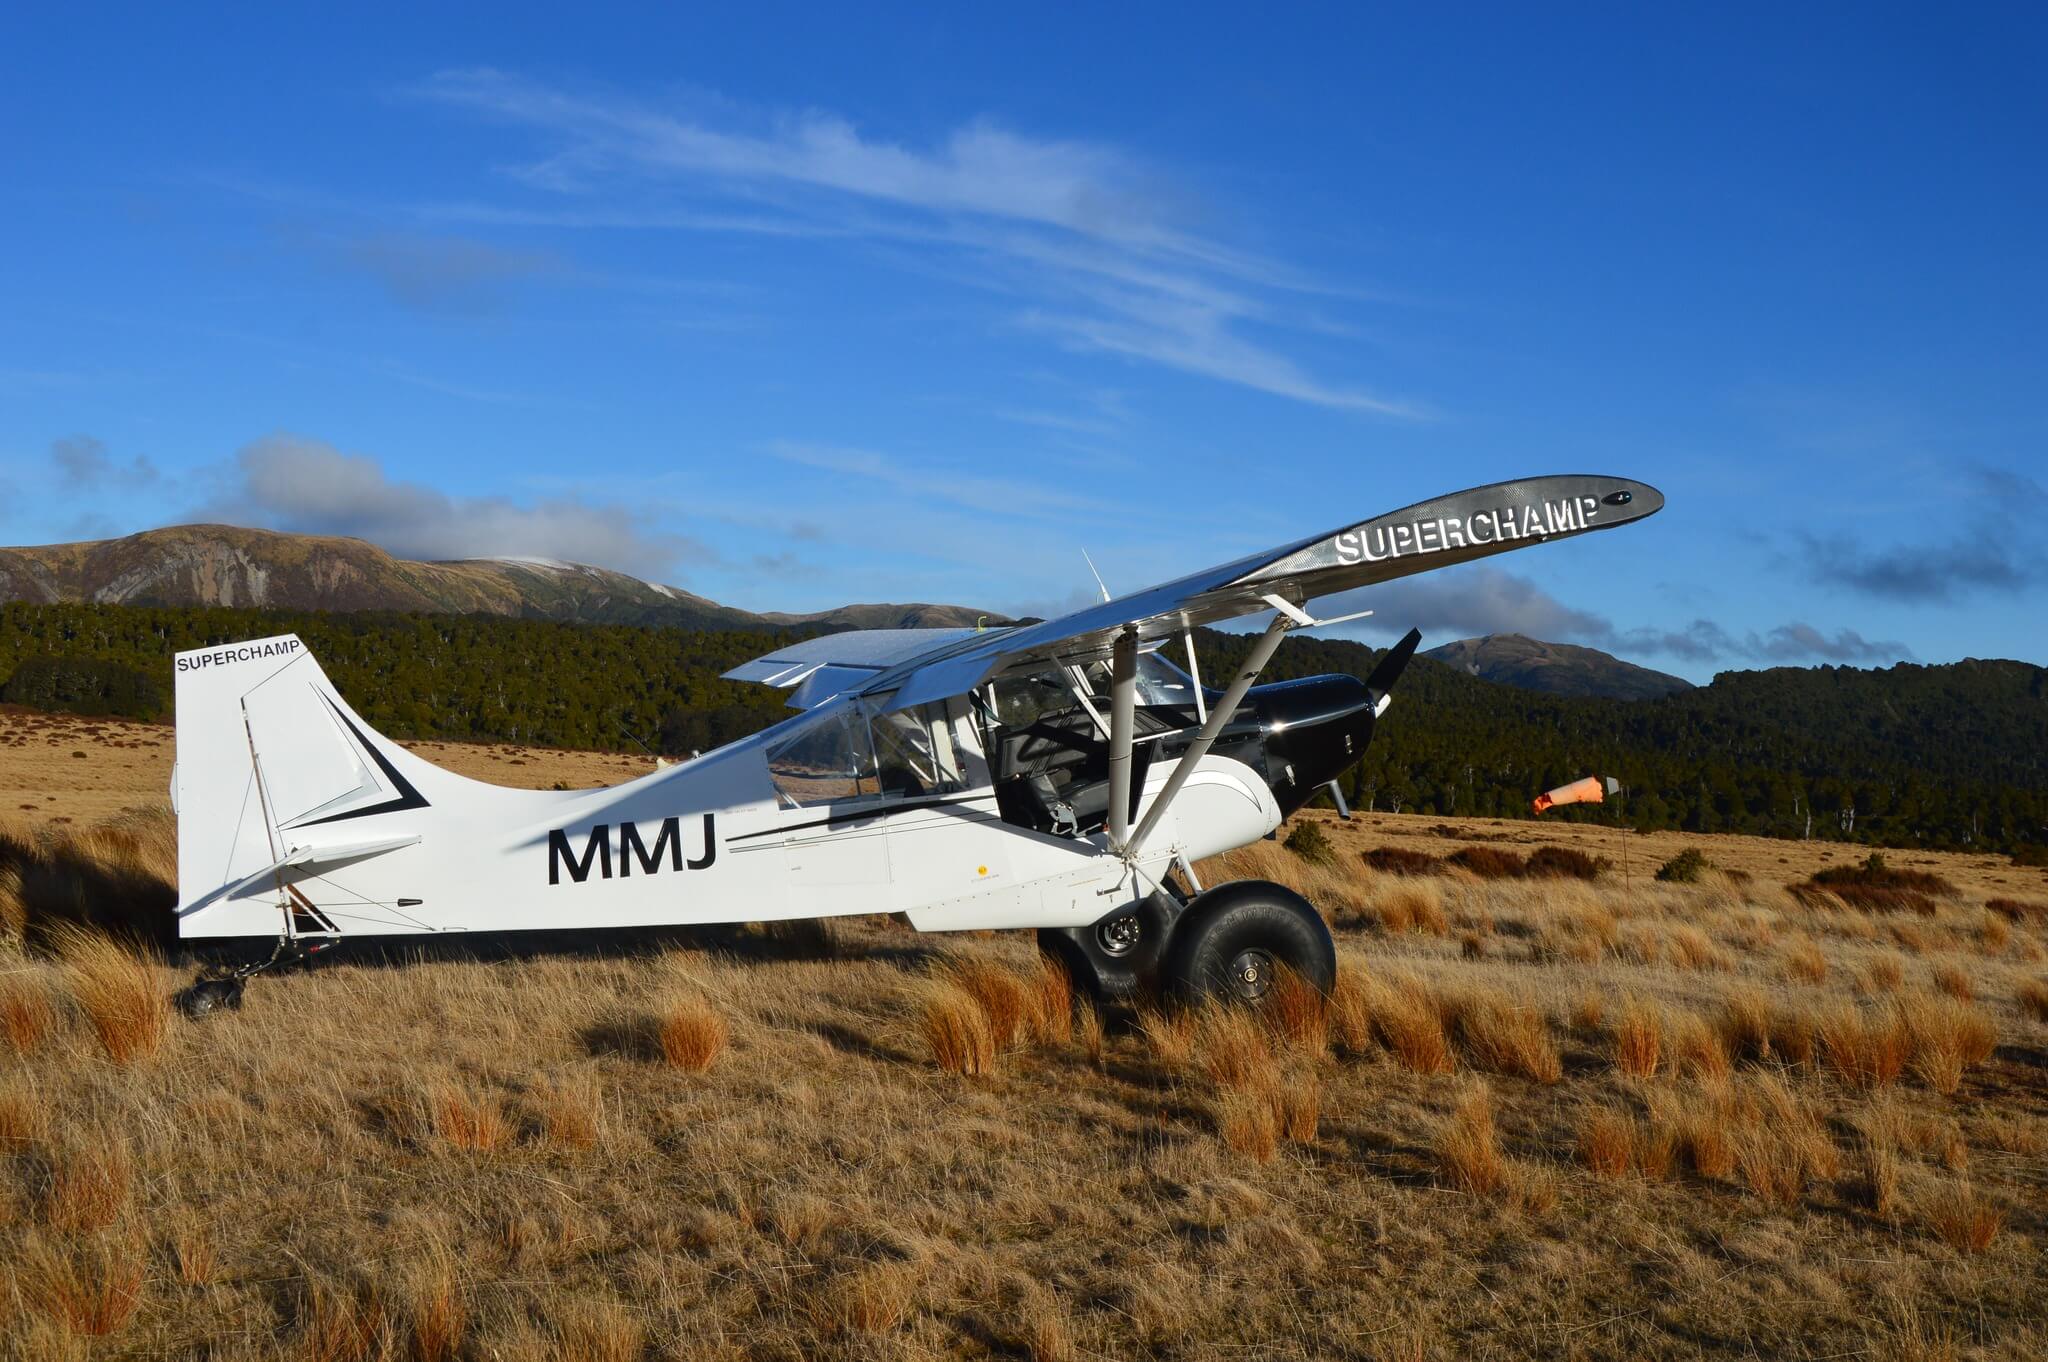 M1 Superchamp Bush Plane designed for Backcountry hunting